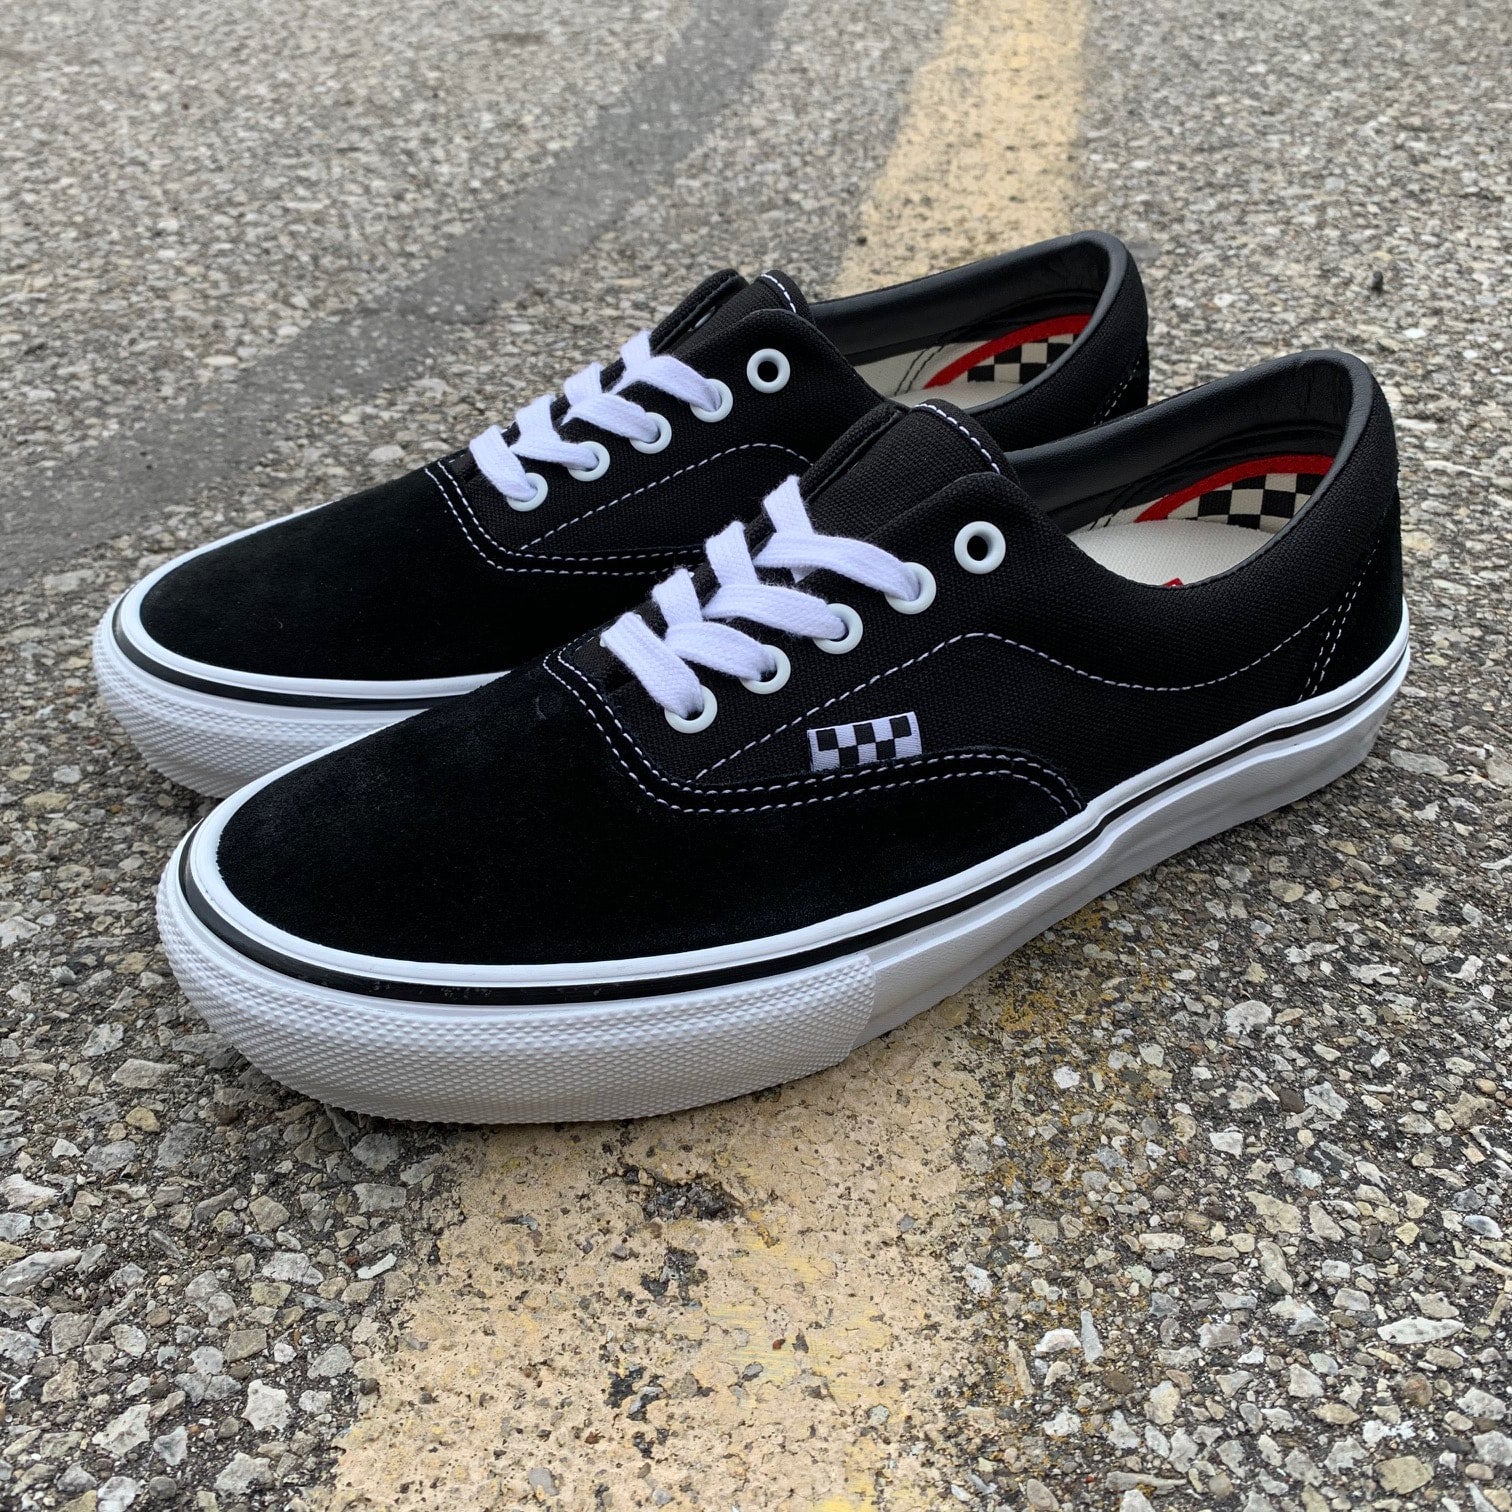 Vans Black/White | Minus Skate Shop Indianapolis, IN